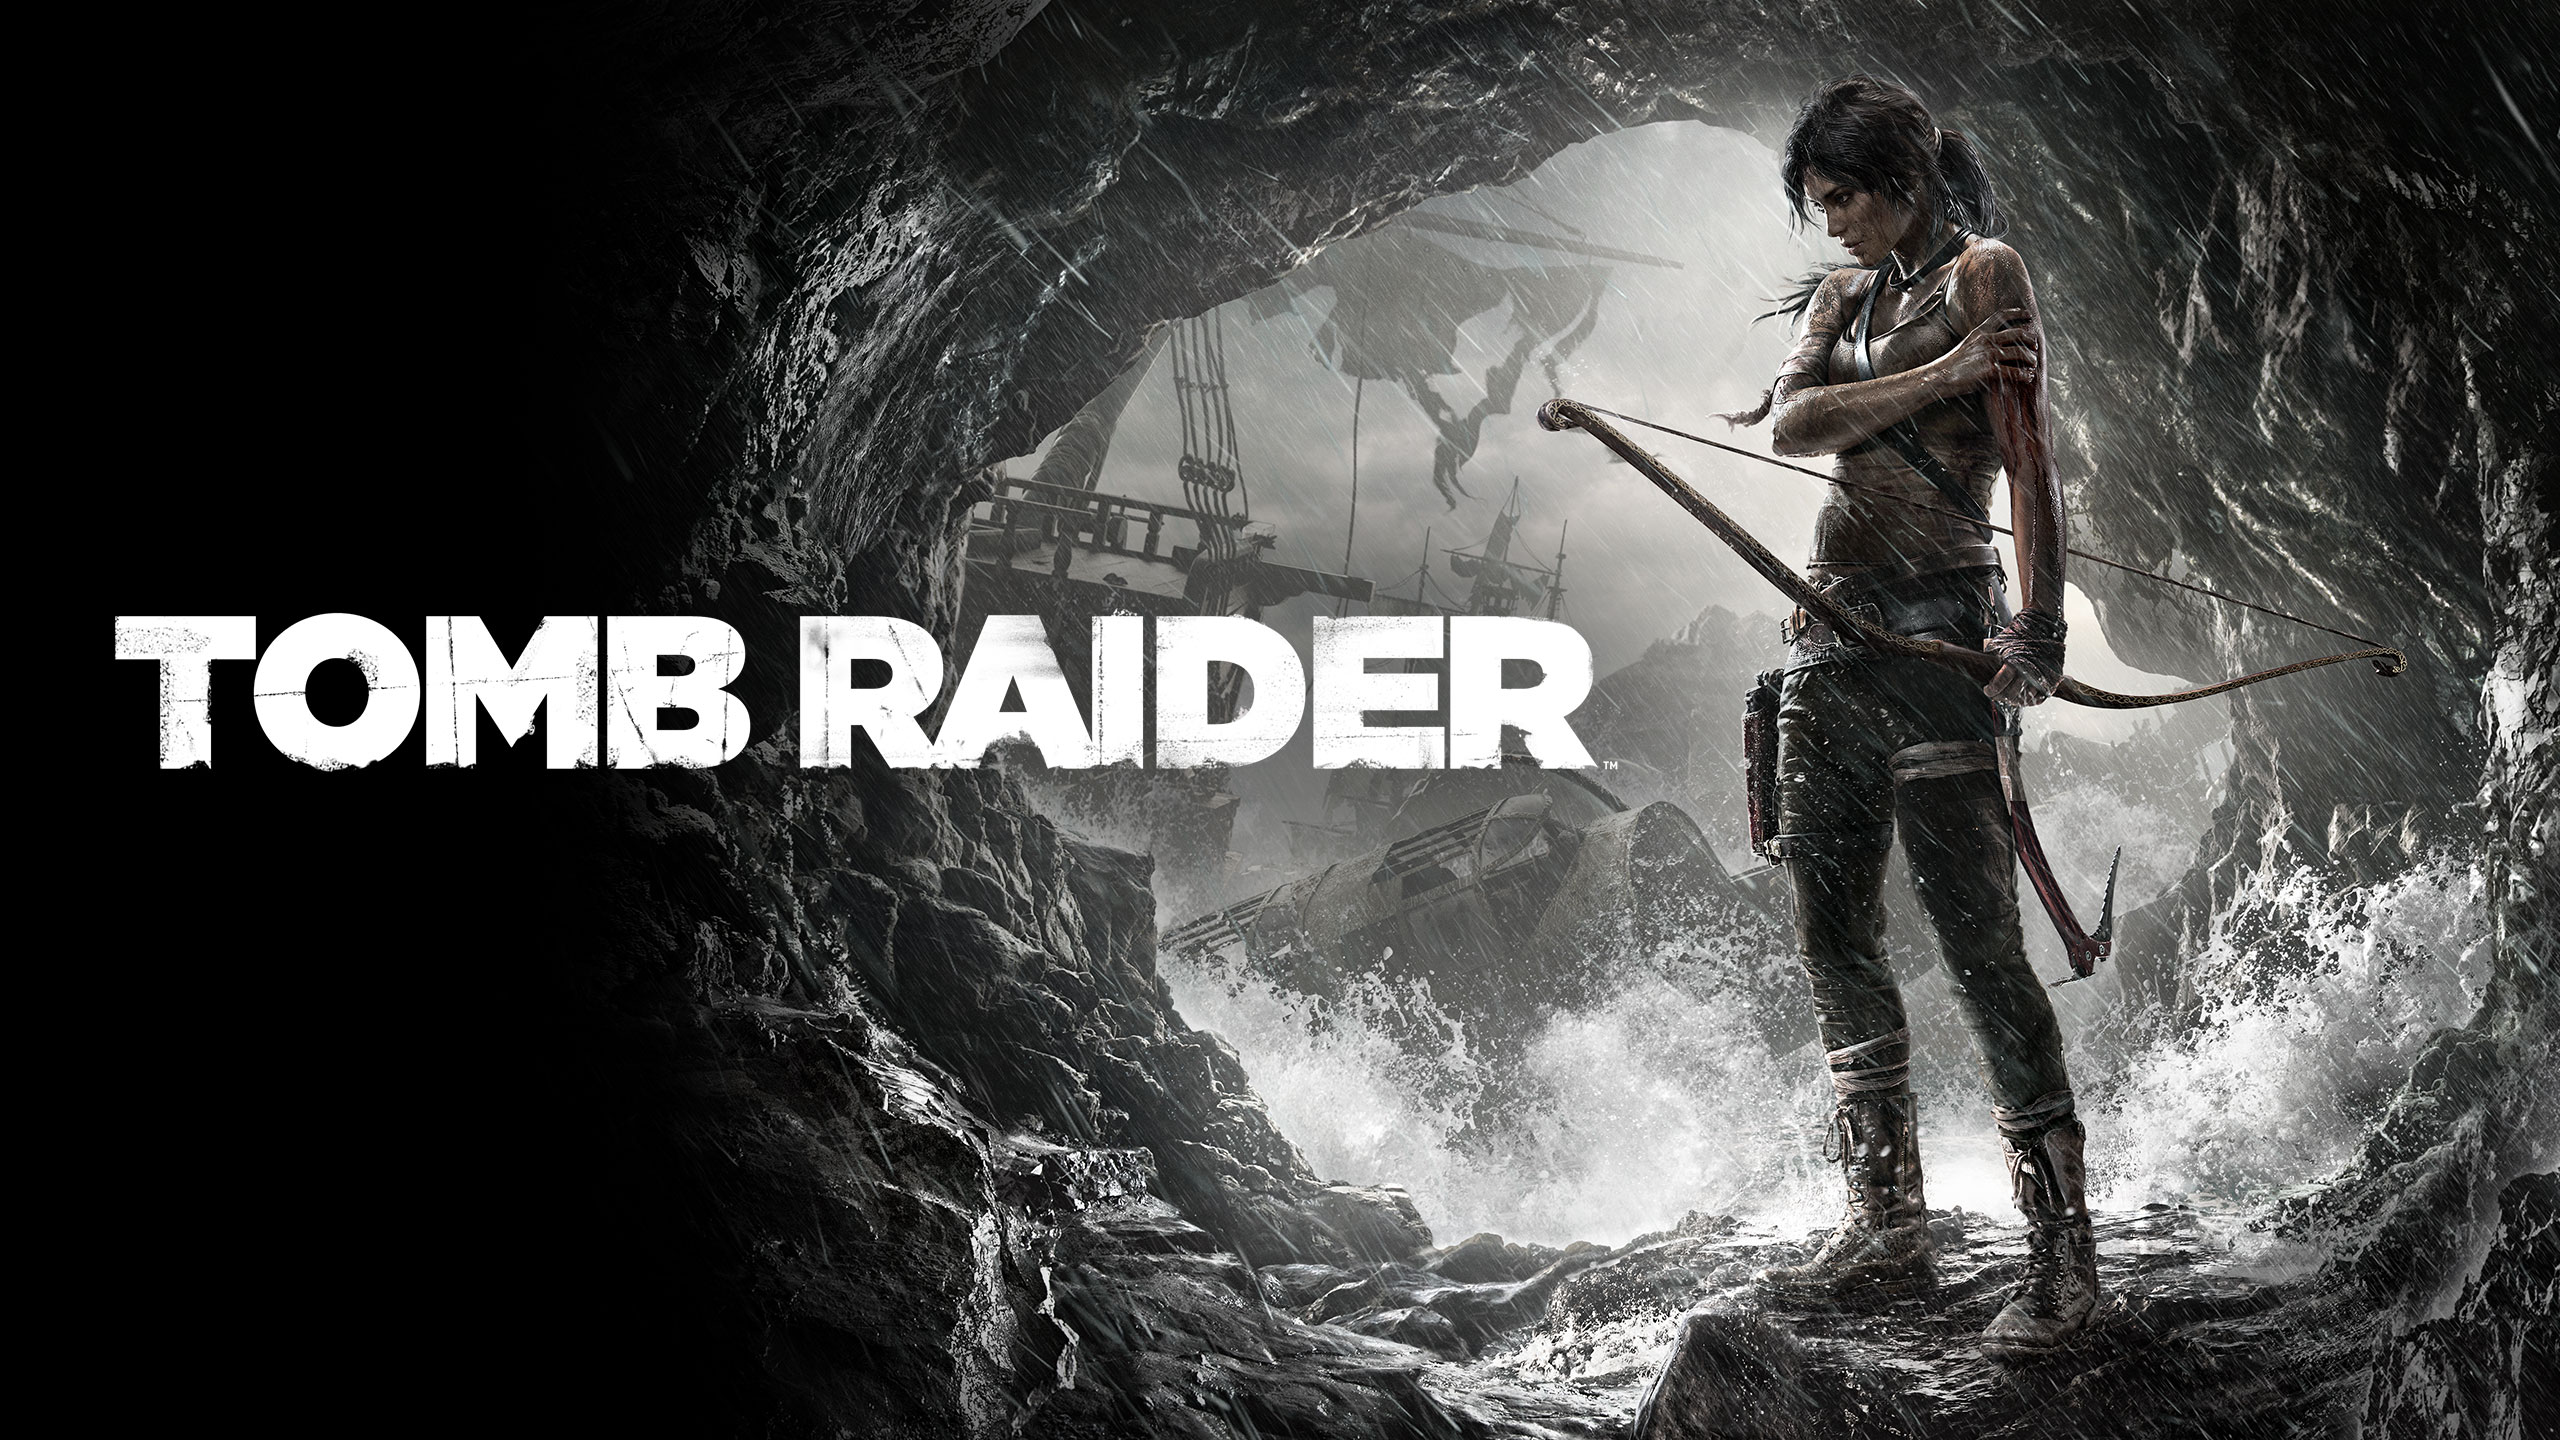 Tomb Raider Writer Lara Croft's Daddy Issues